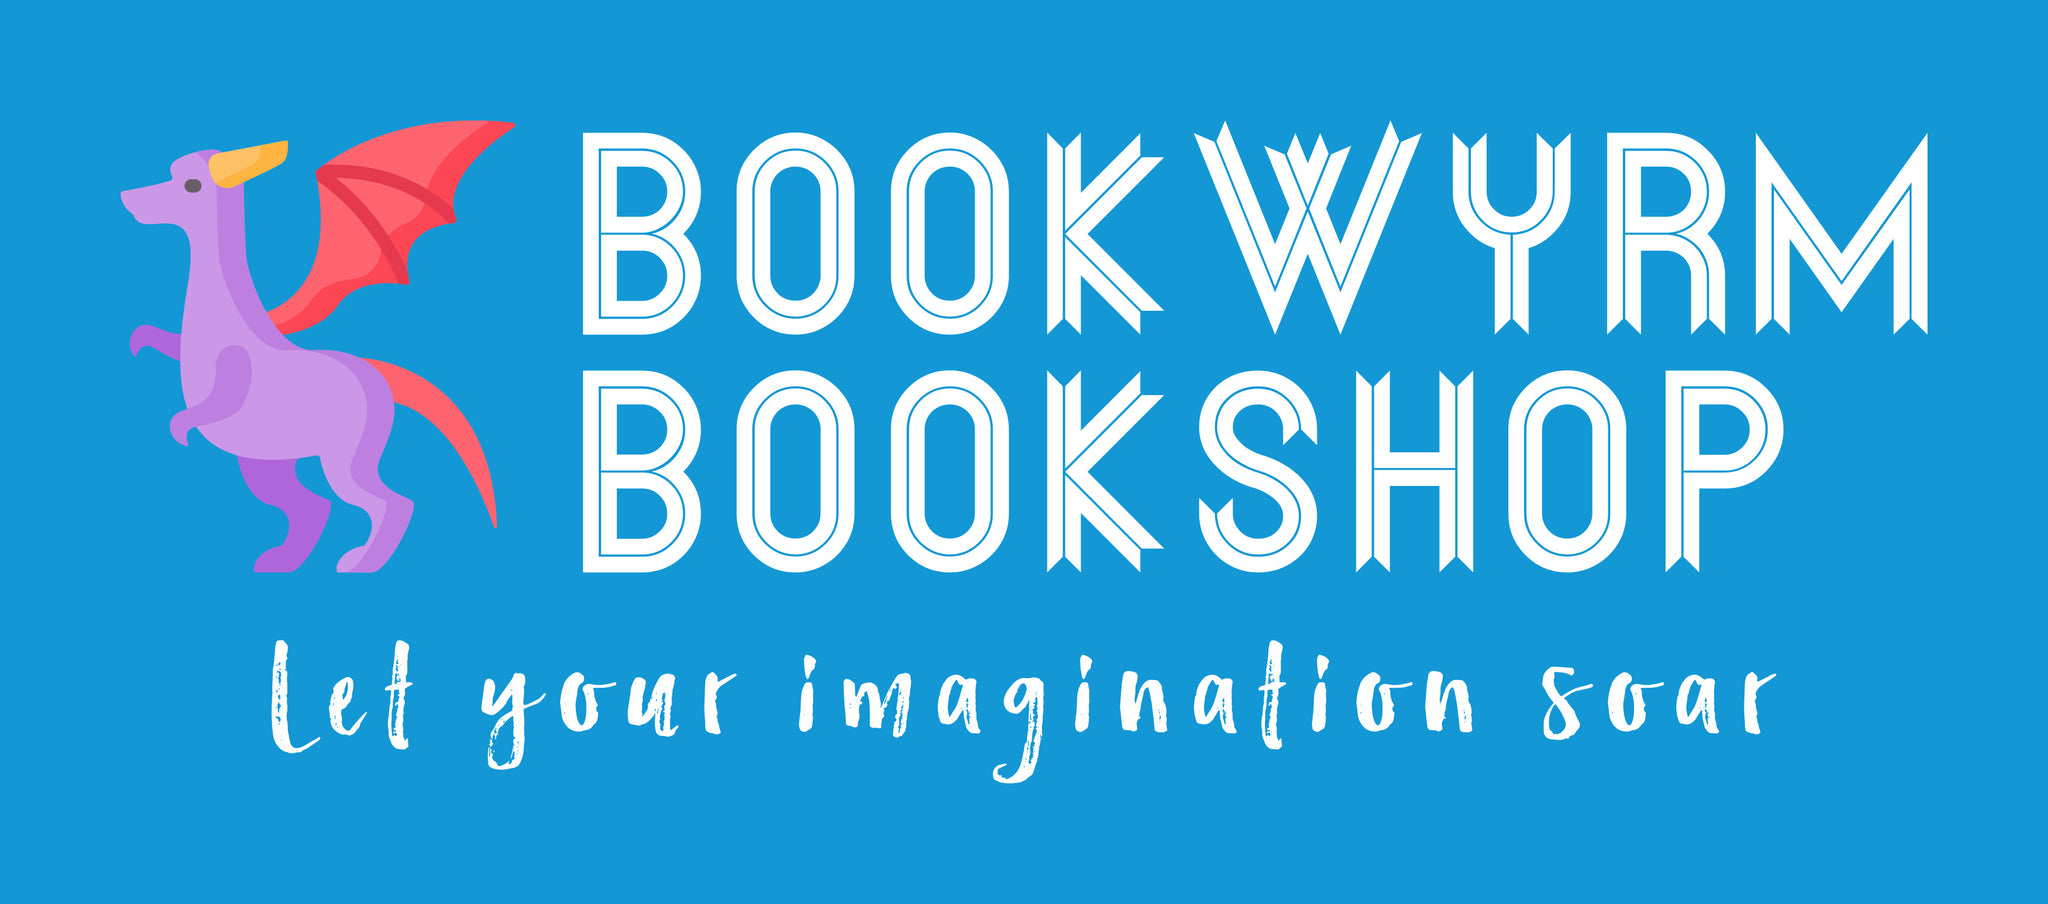 Bookwyrm Bookshop Gift Card